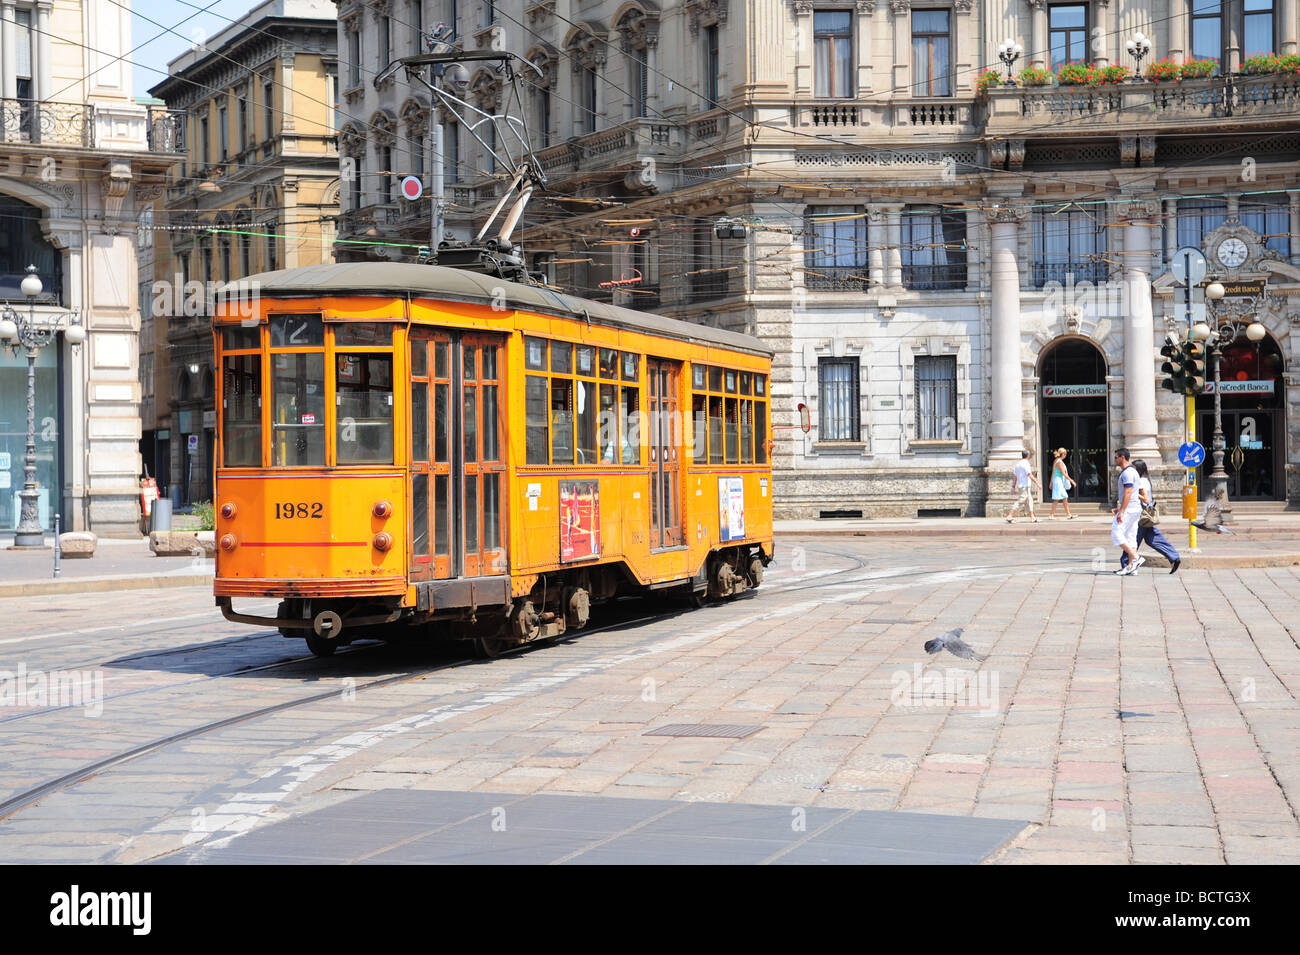 Europe Italy Milan trolley street car public transportation Stock Photo -  Alamy